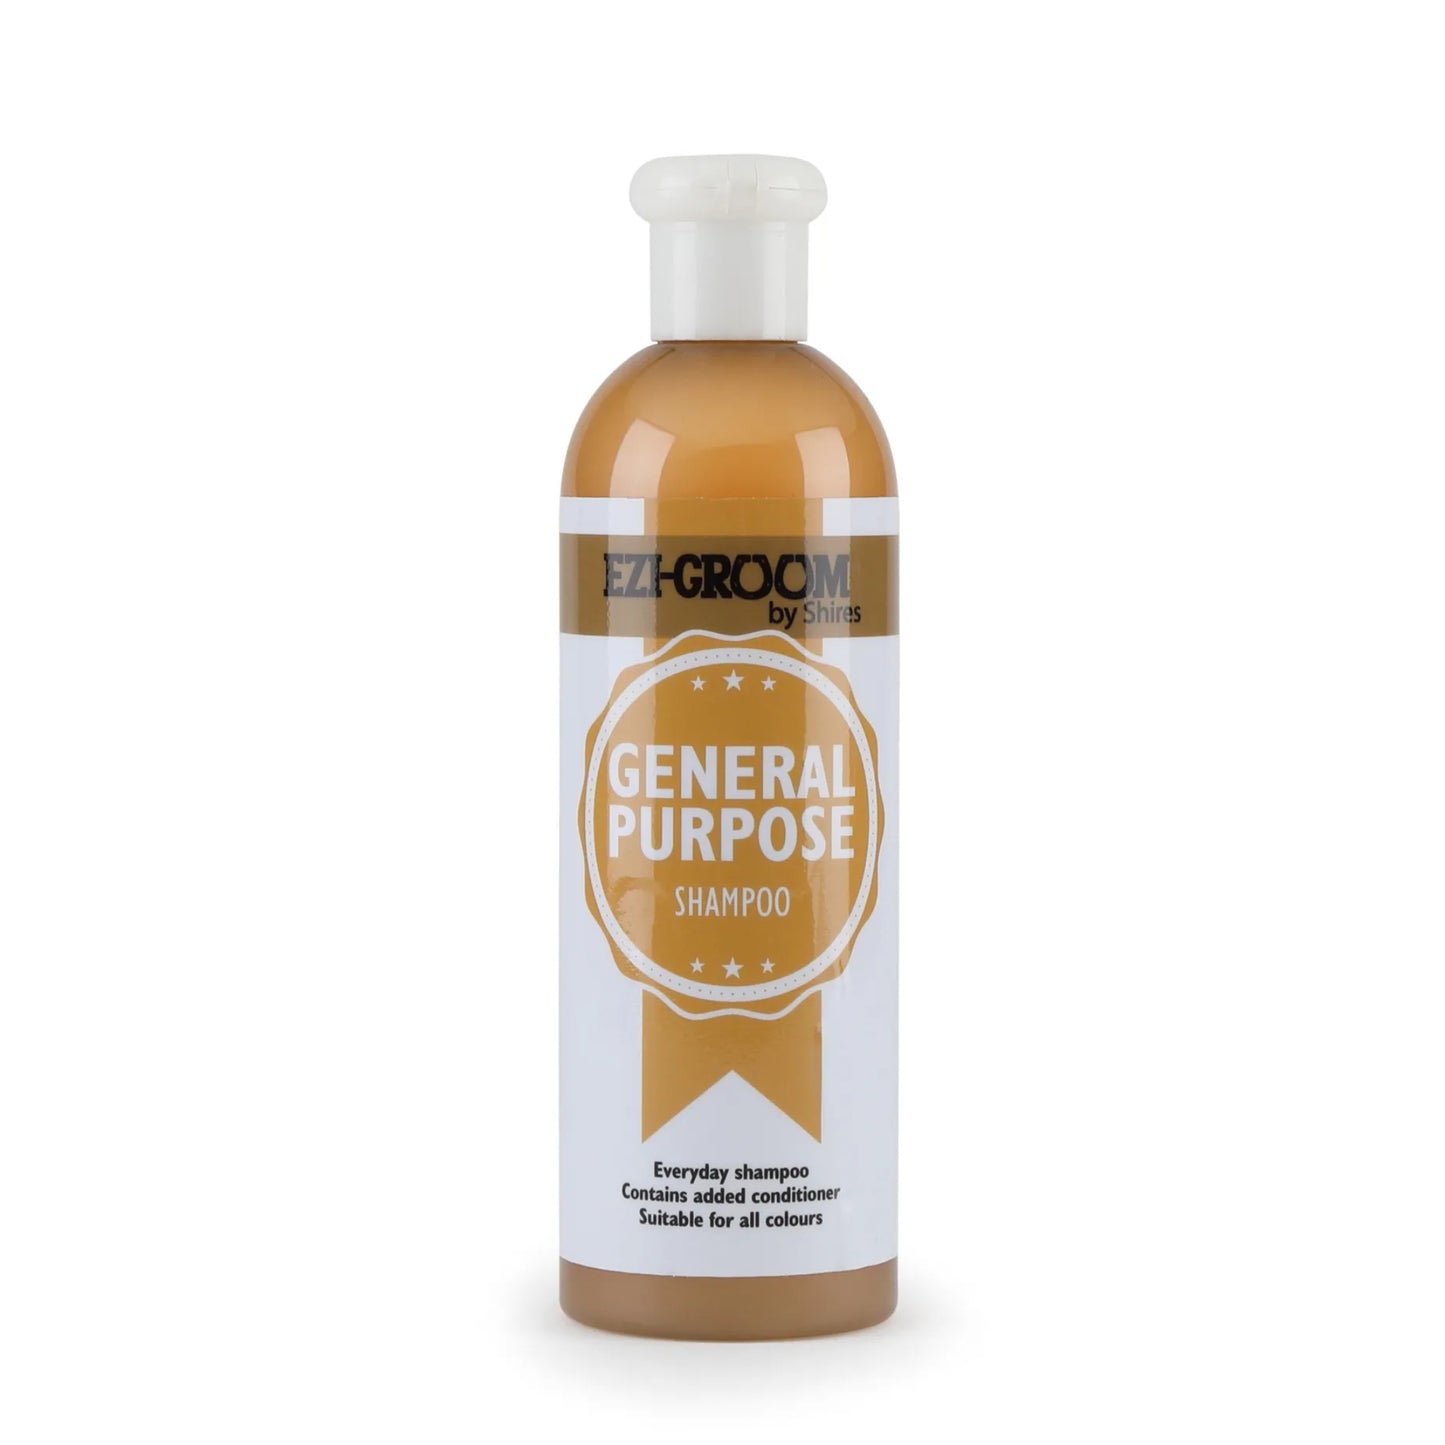 Ezi-Groom General Purpose Shampoo